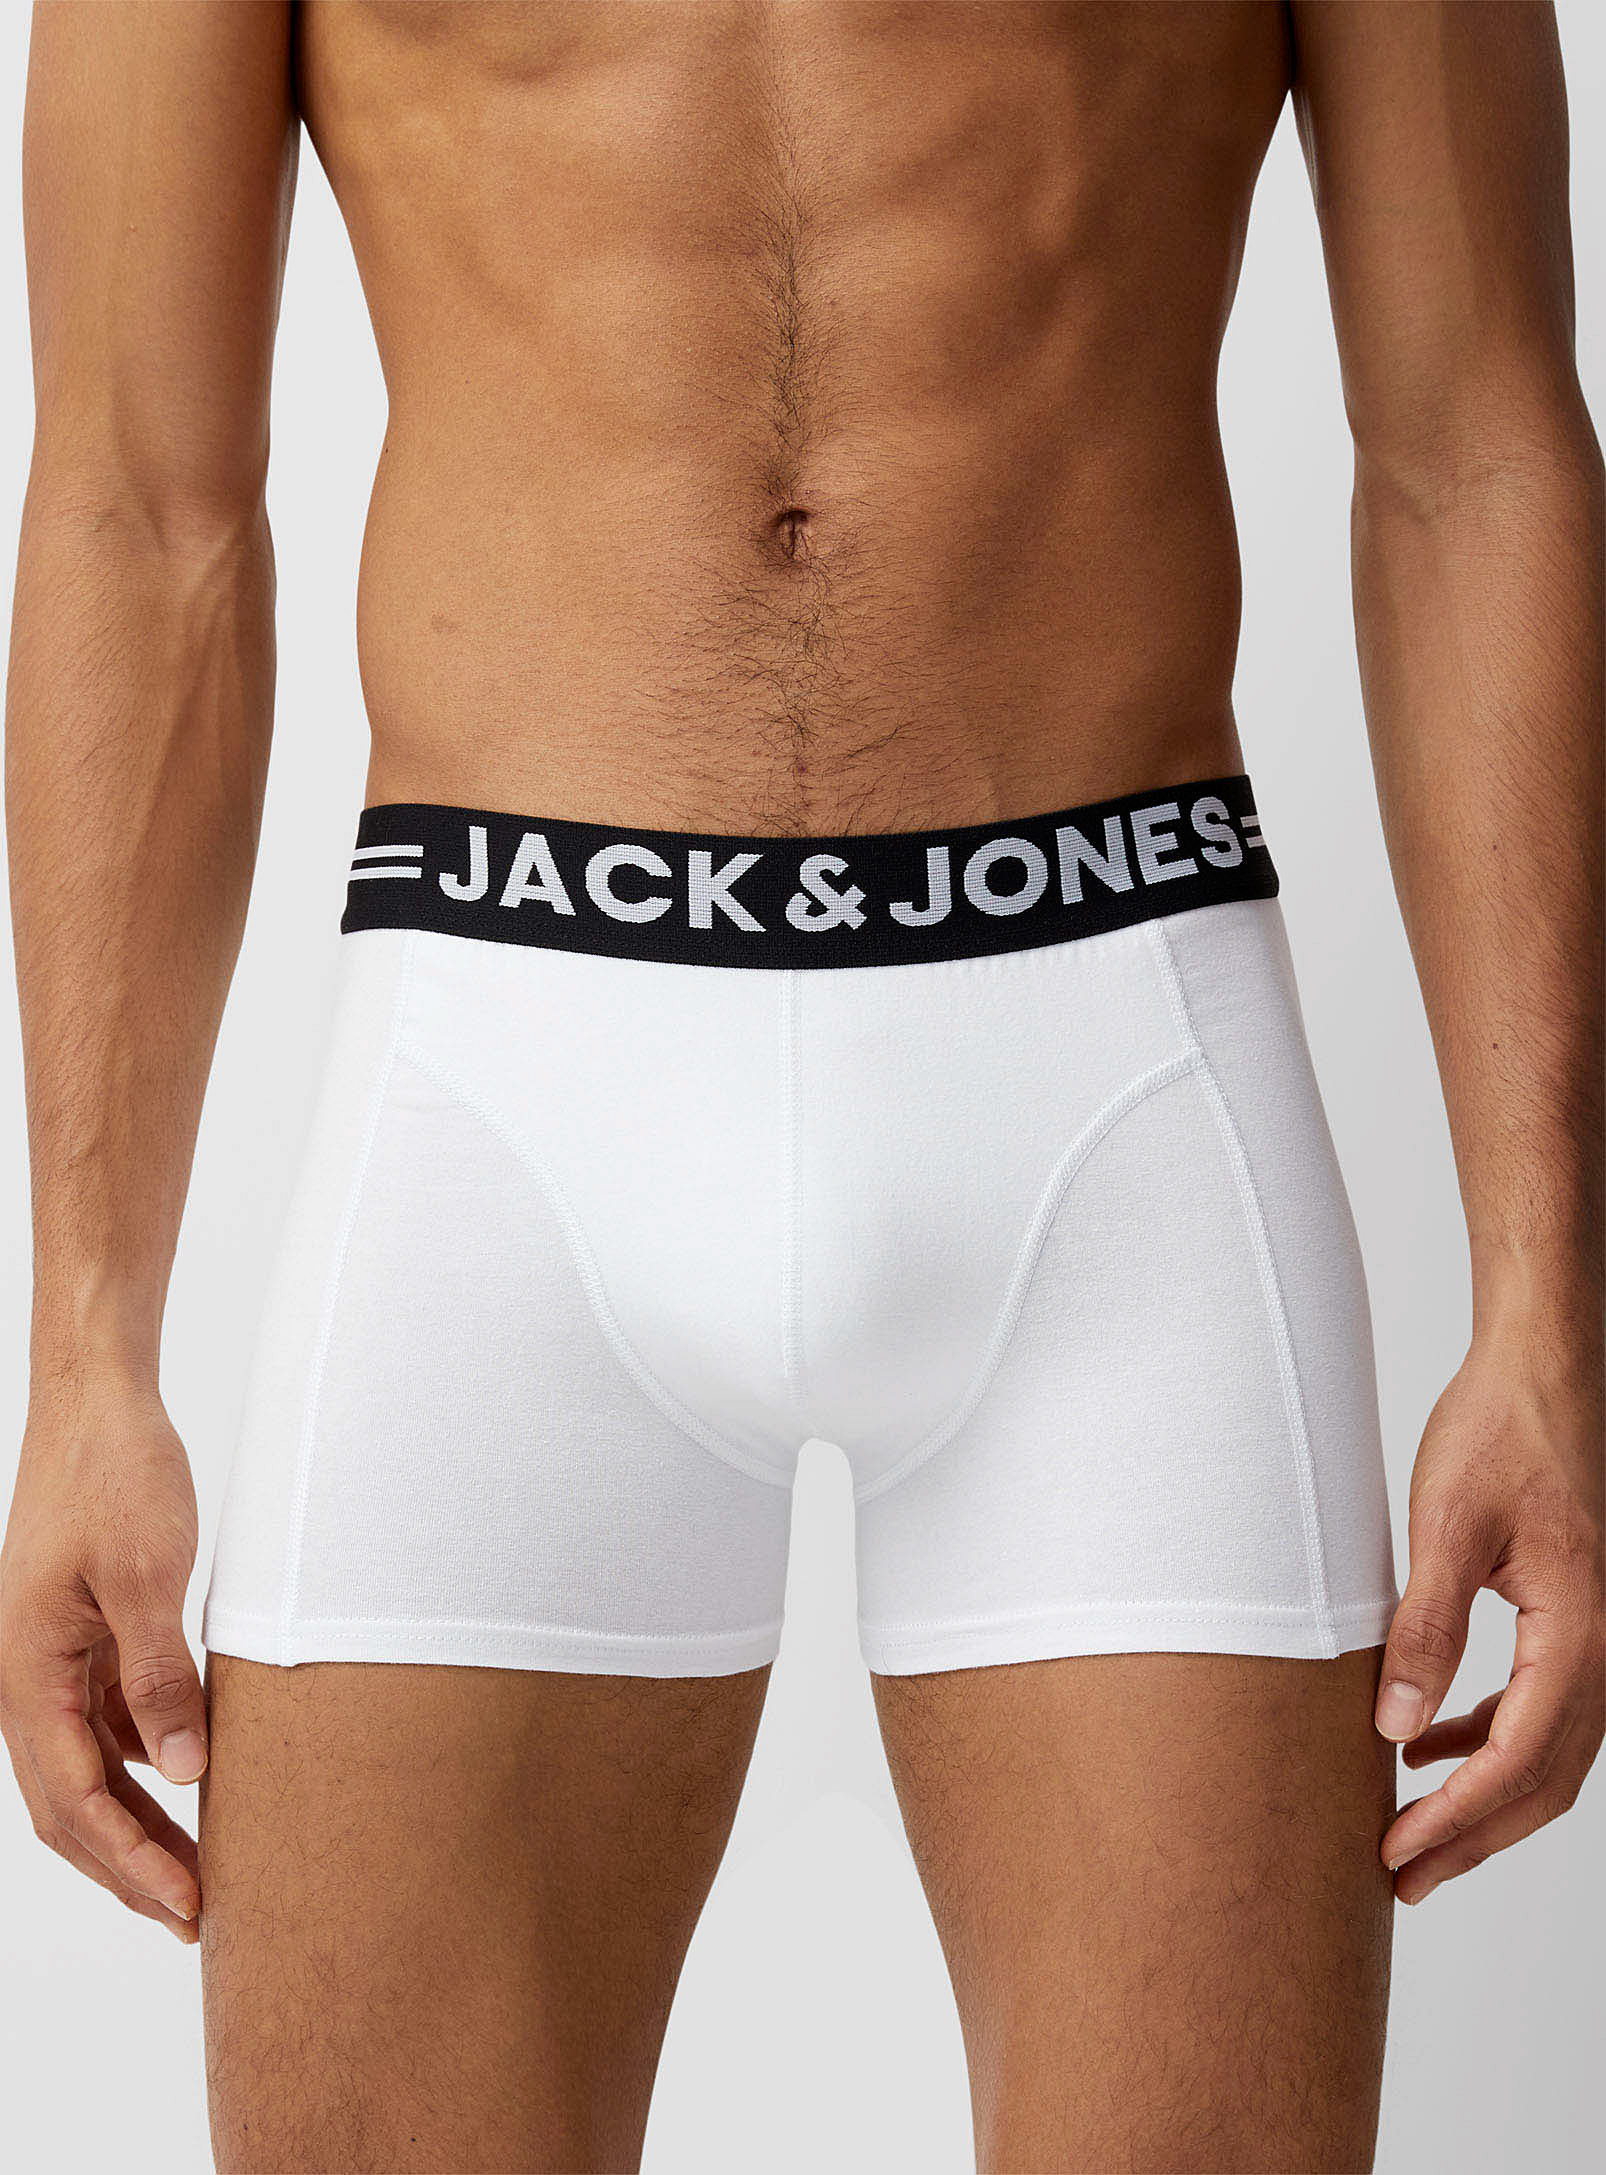 Jack & Jones Logo Waist Trunk In White